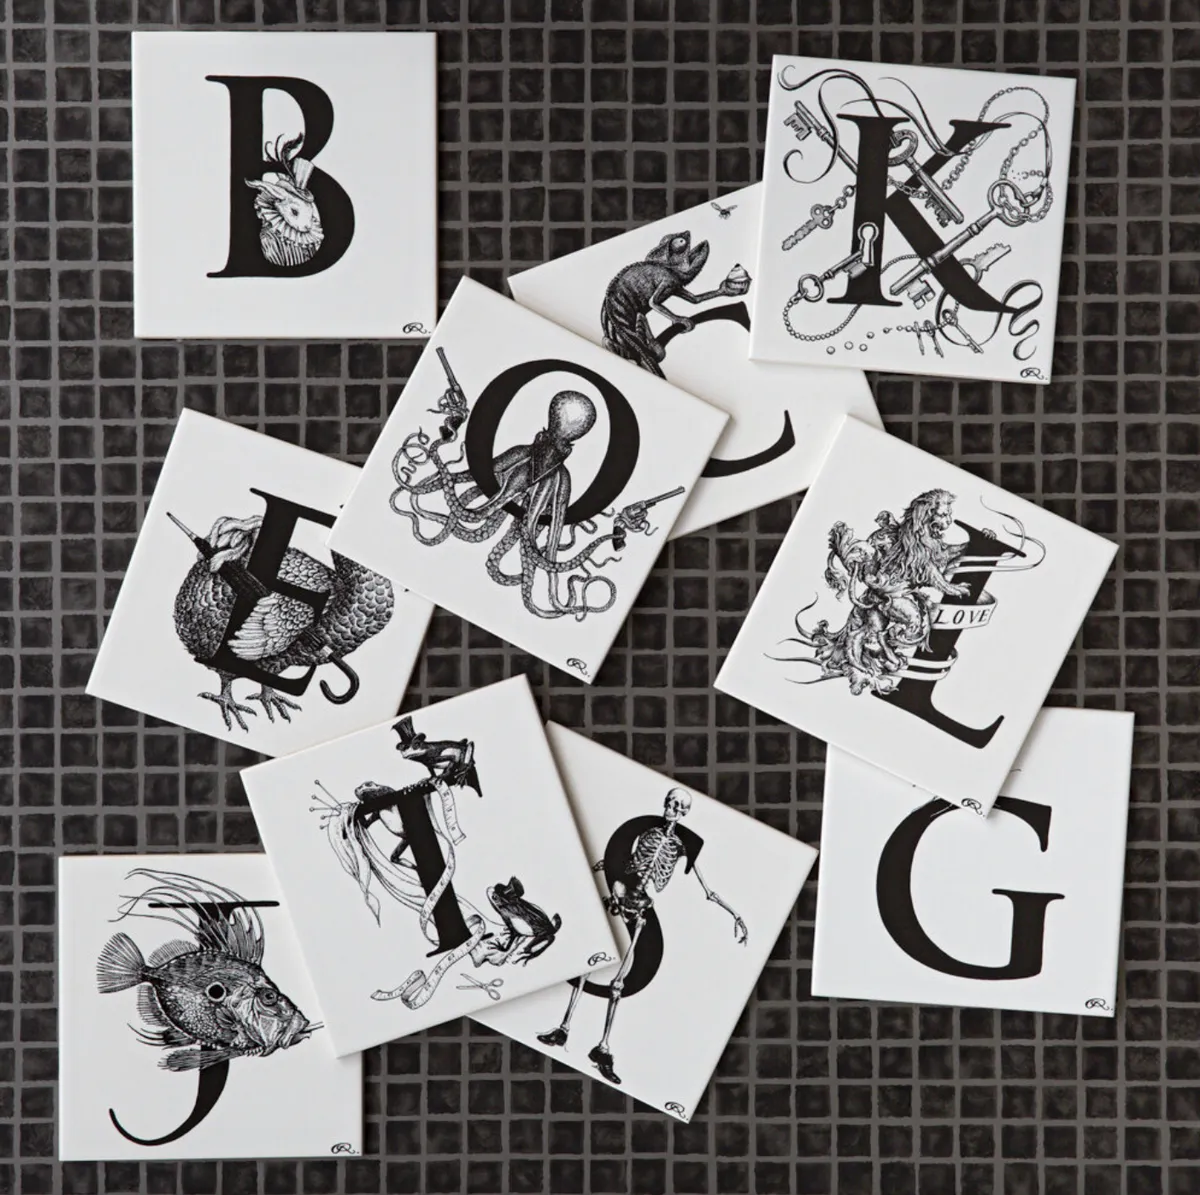 Rory Dobner’s alphabet tile collection